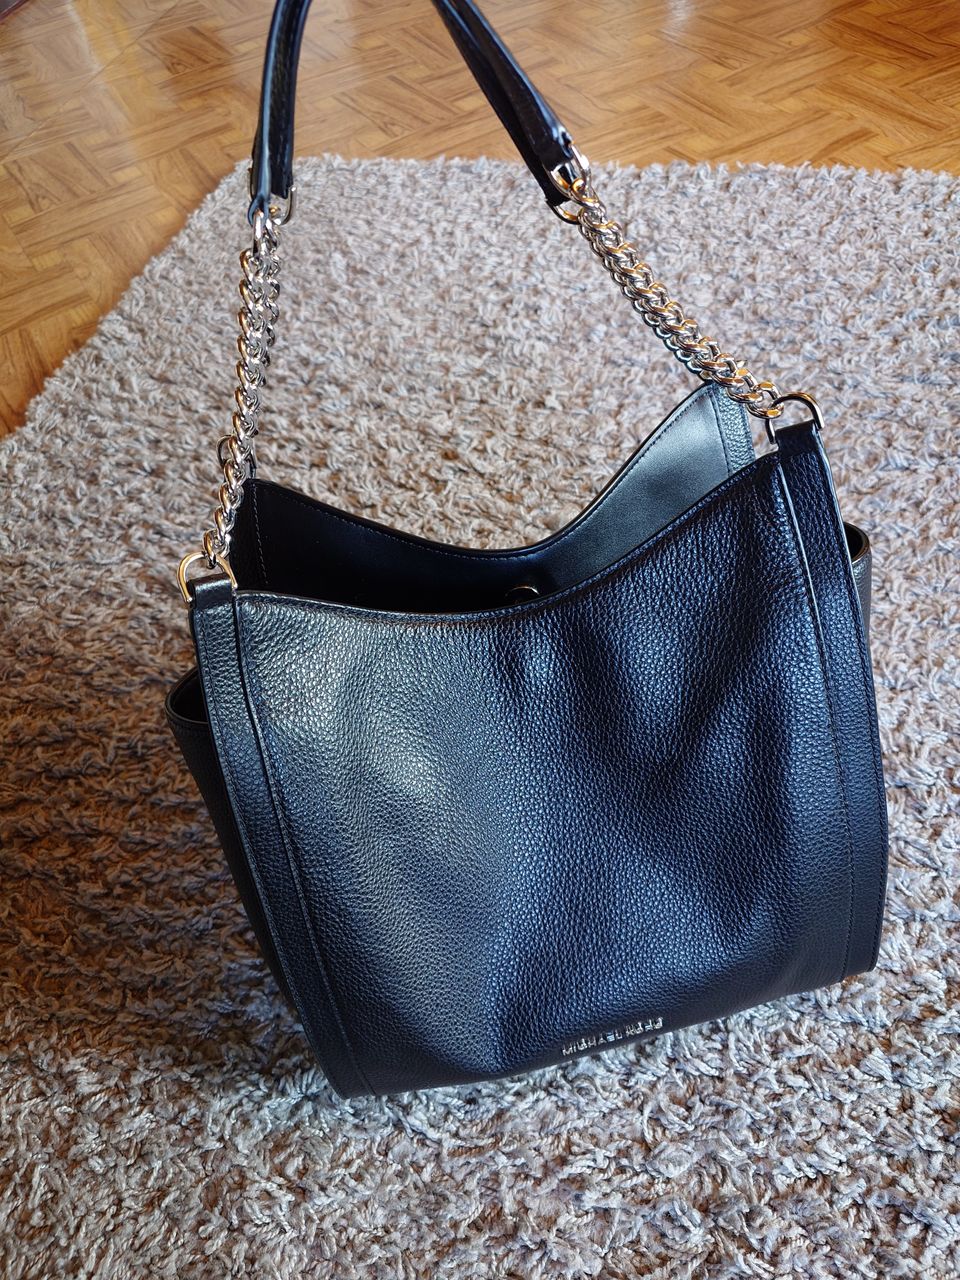 Michael Kors - Newbury Medium Pebbled Leather Tote Bag